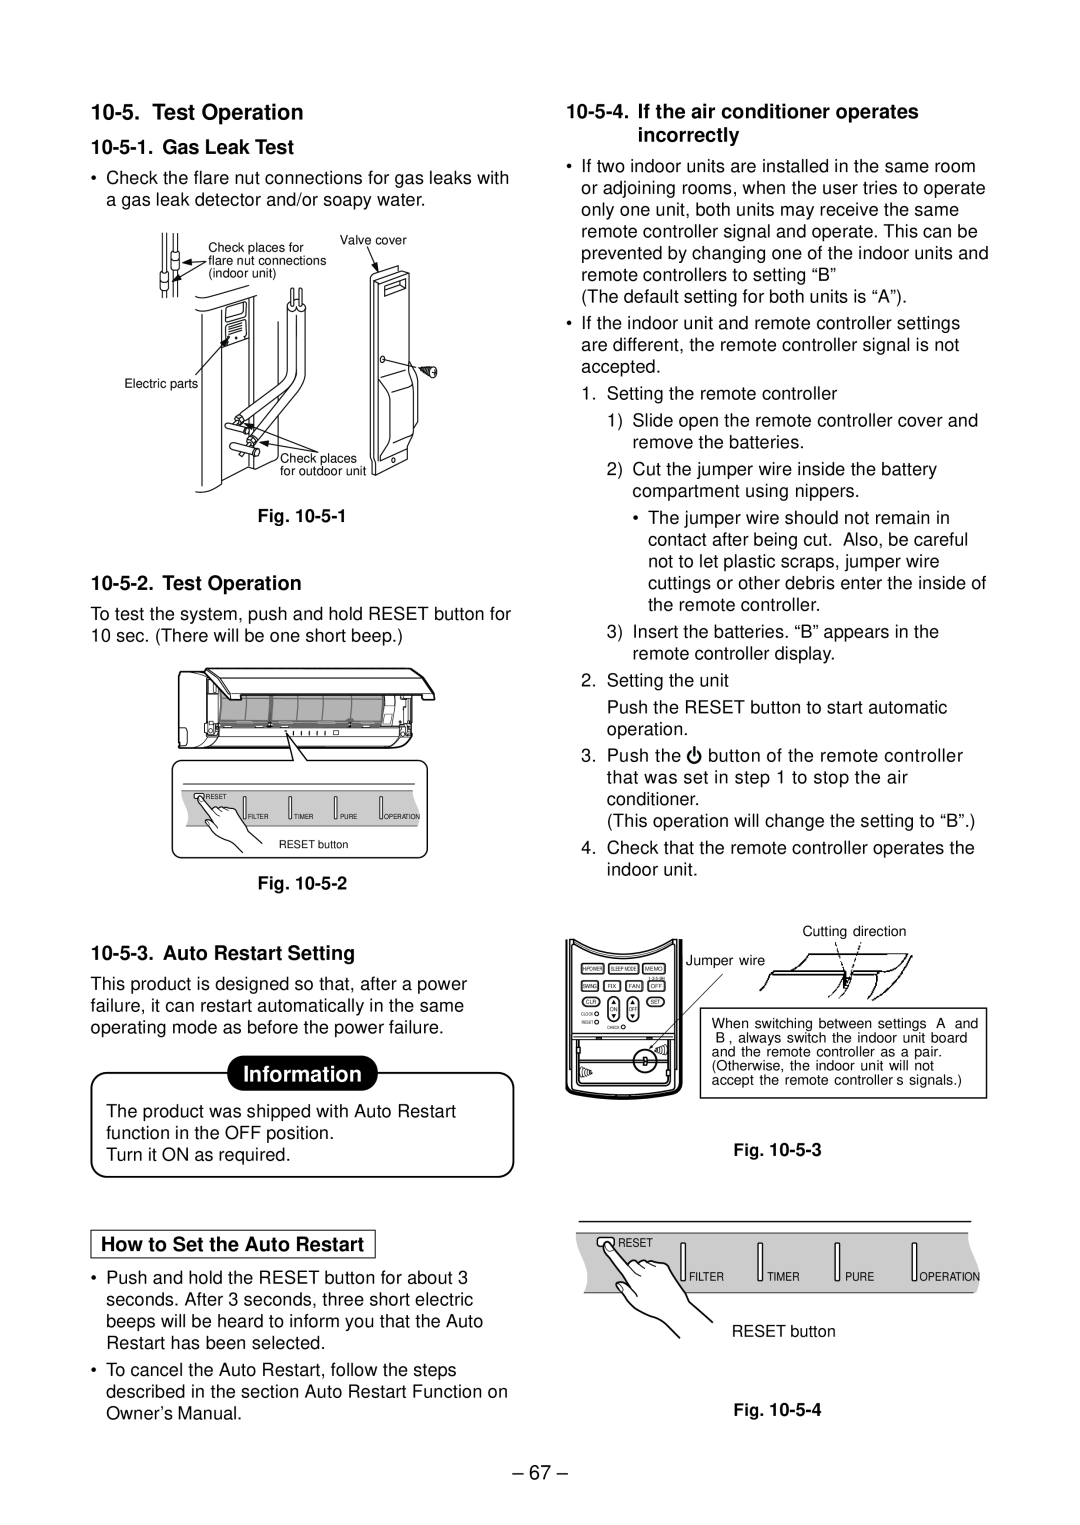 Toshiba RAS-B10SKVP-E Information, Gas Leak Test, Test Operation, Auto Restart Setting, How to Set the Auto Restart 